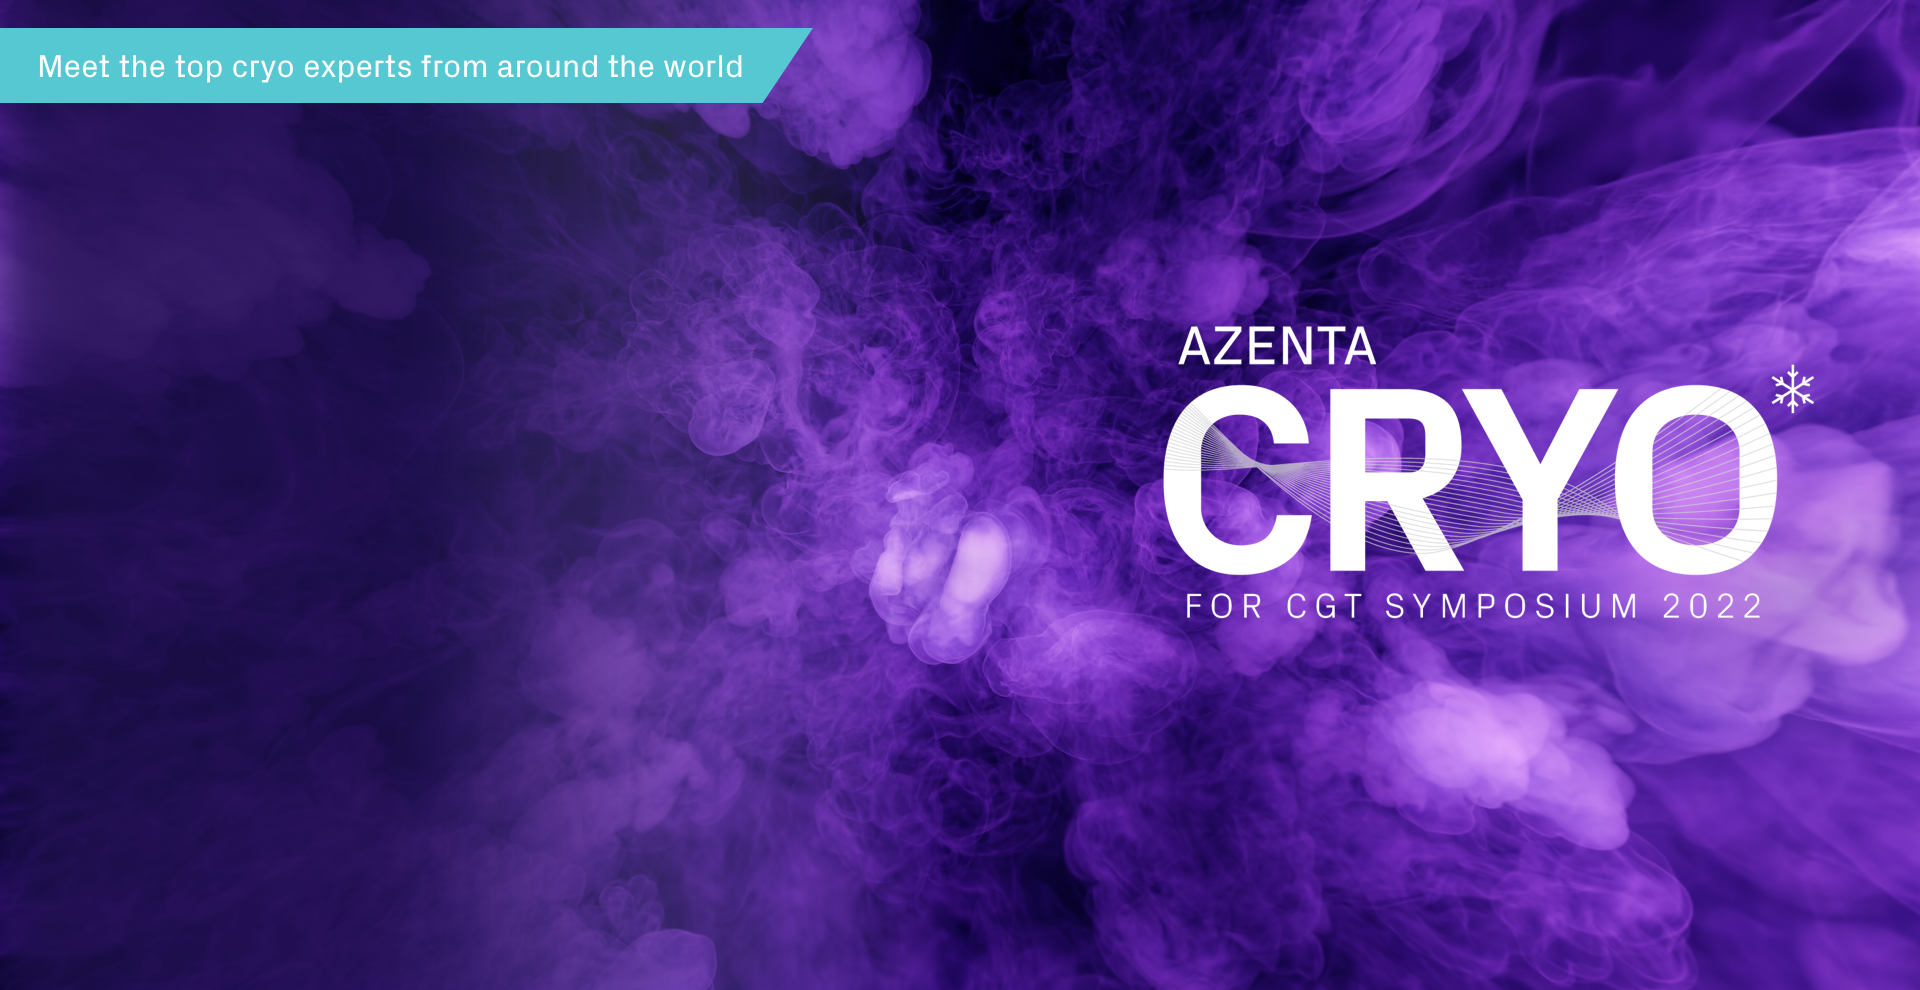 Azenta Cryo For CGT Symposium